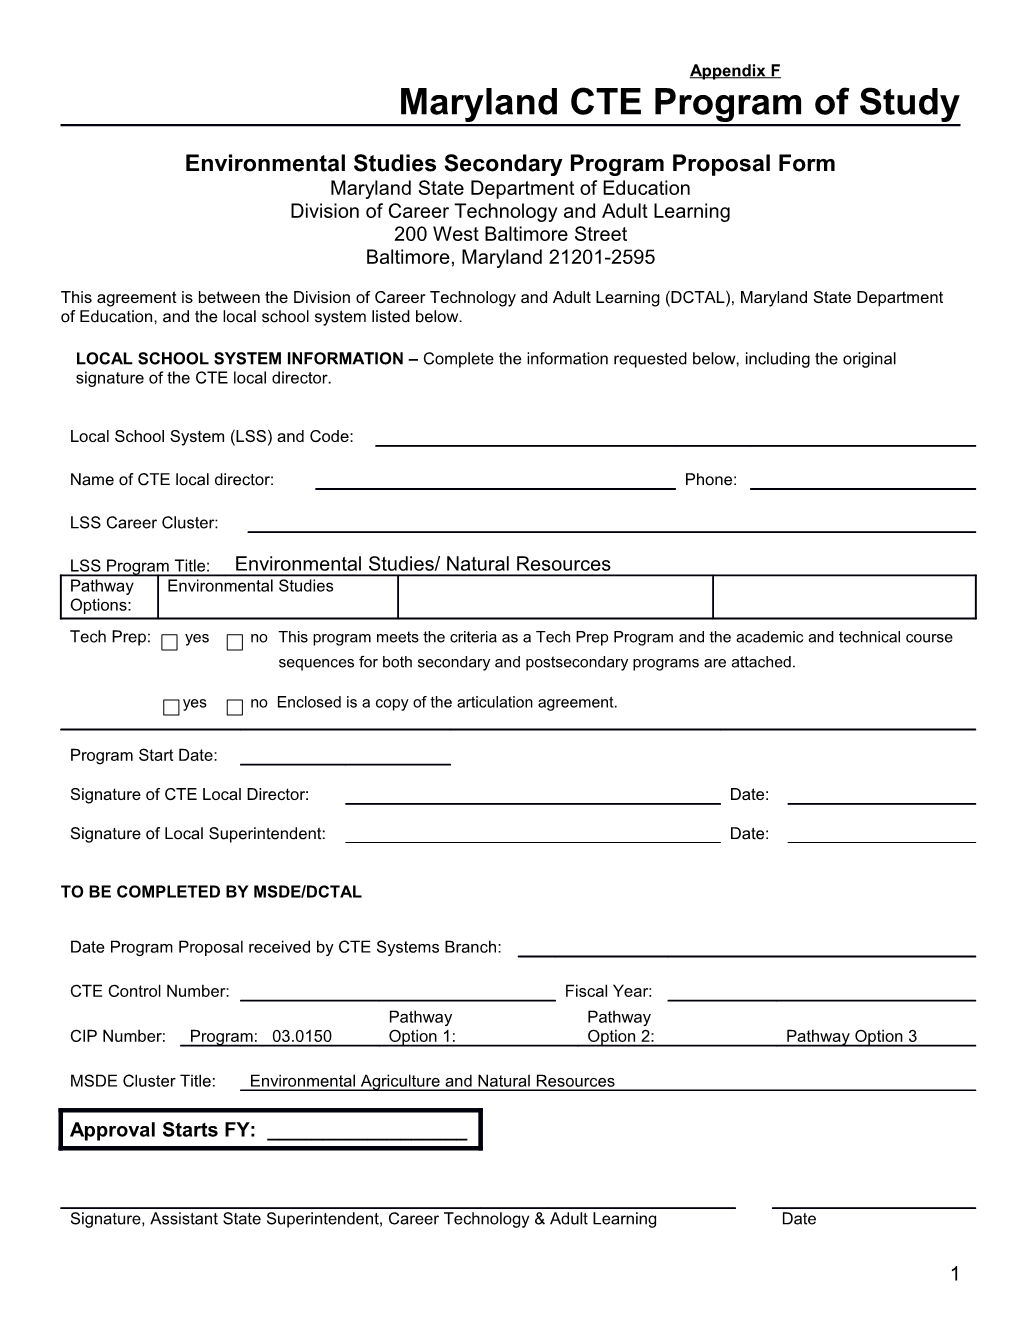 Environmental Studies Secondary Program Proposal Form